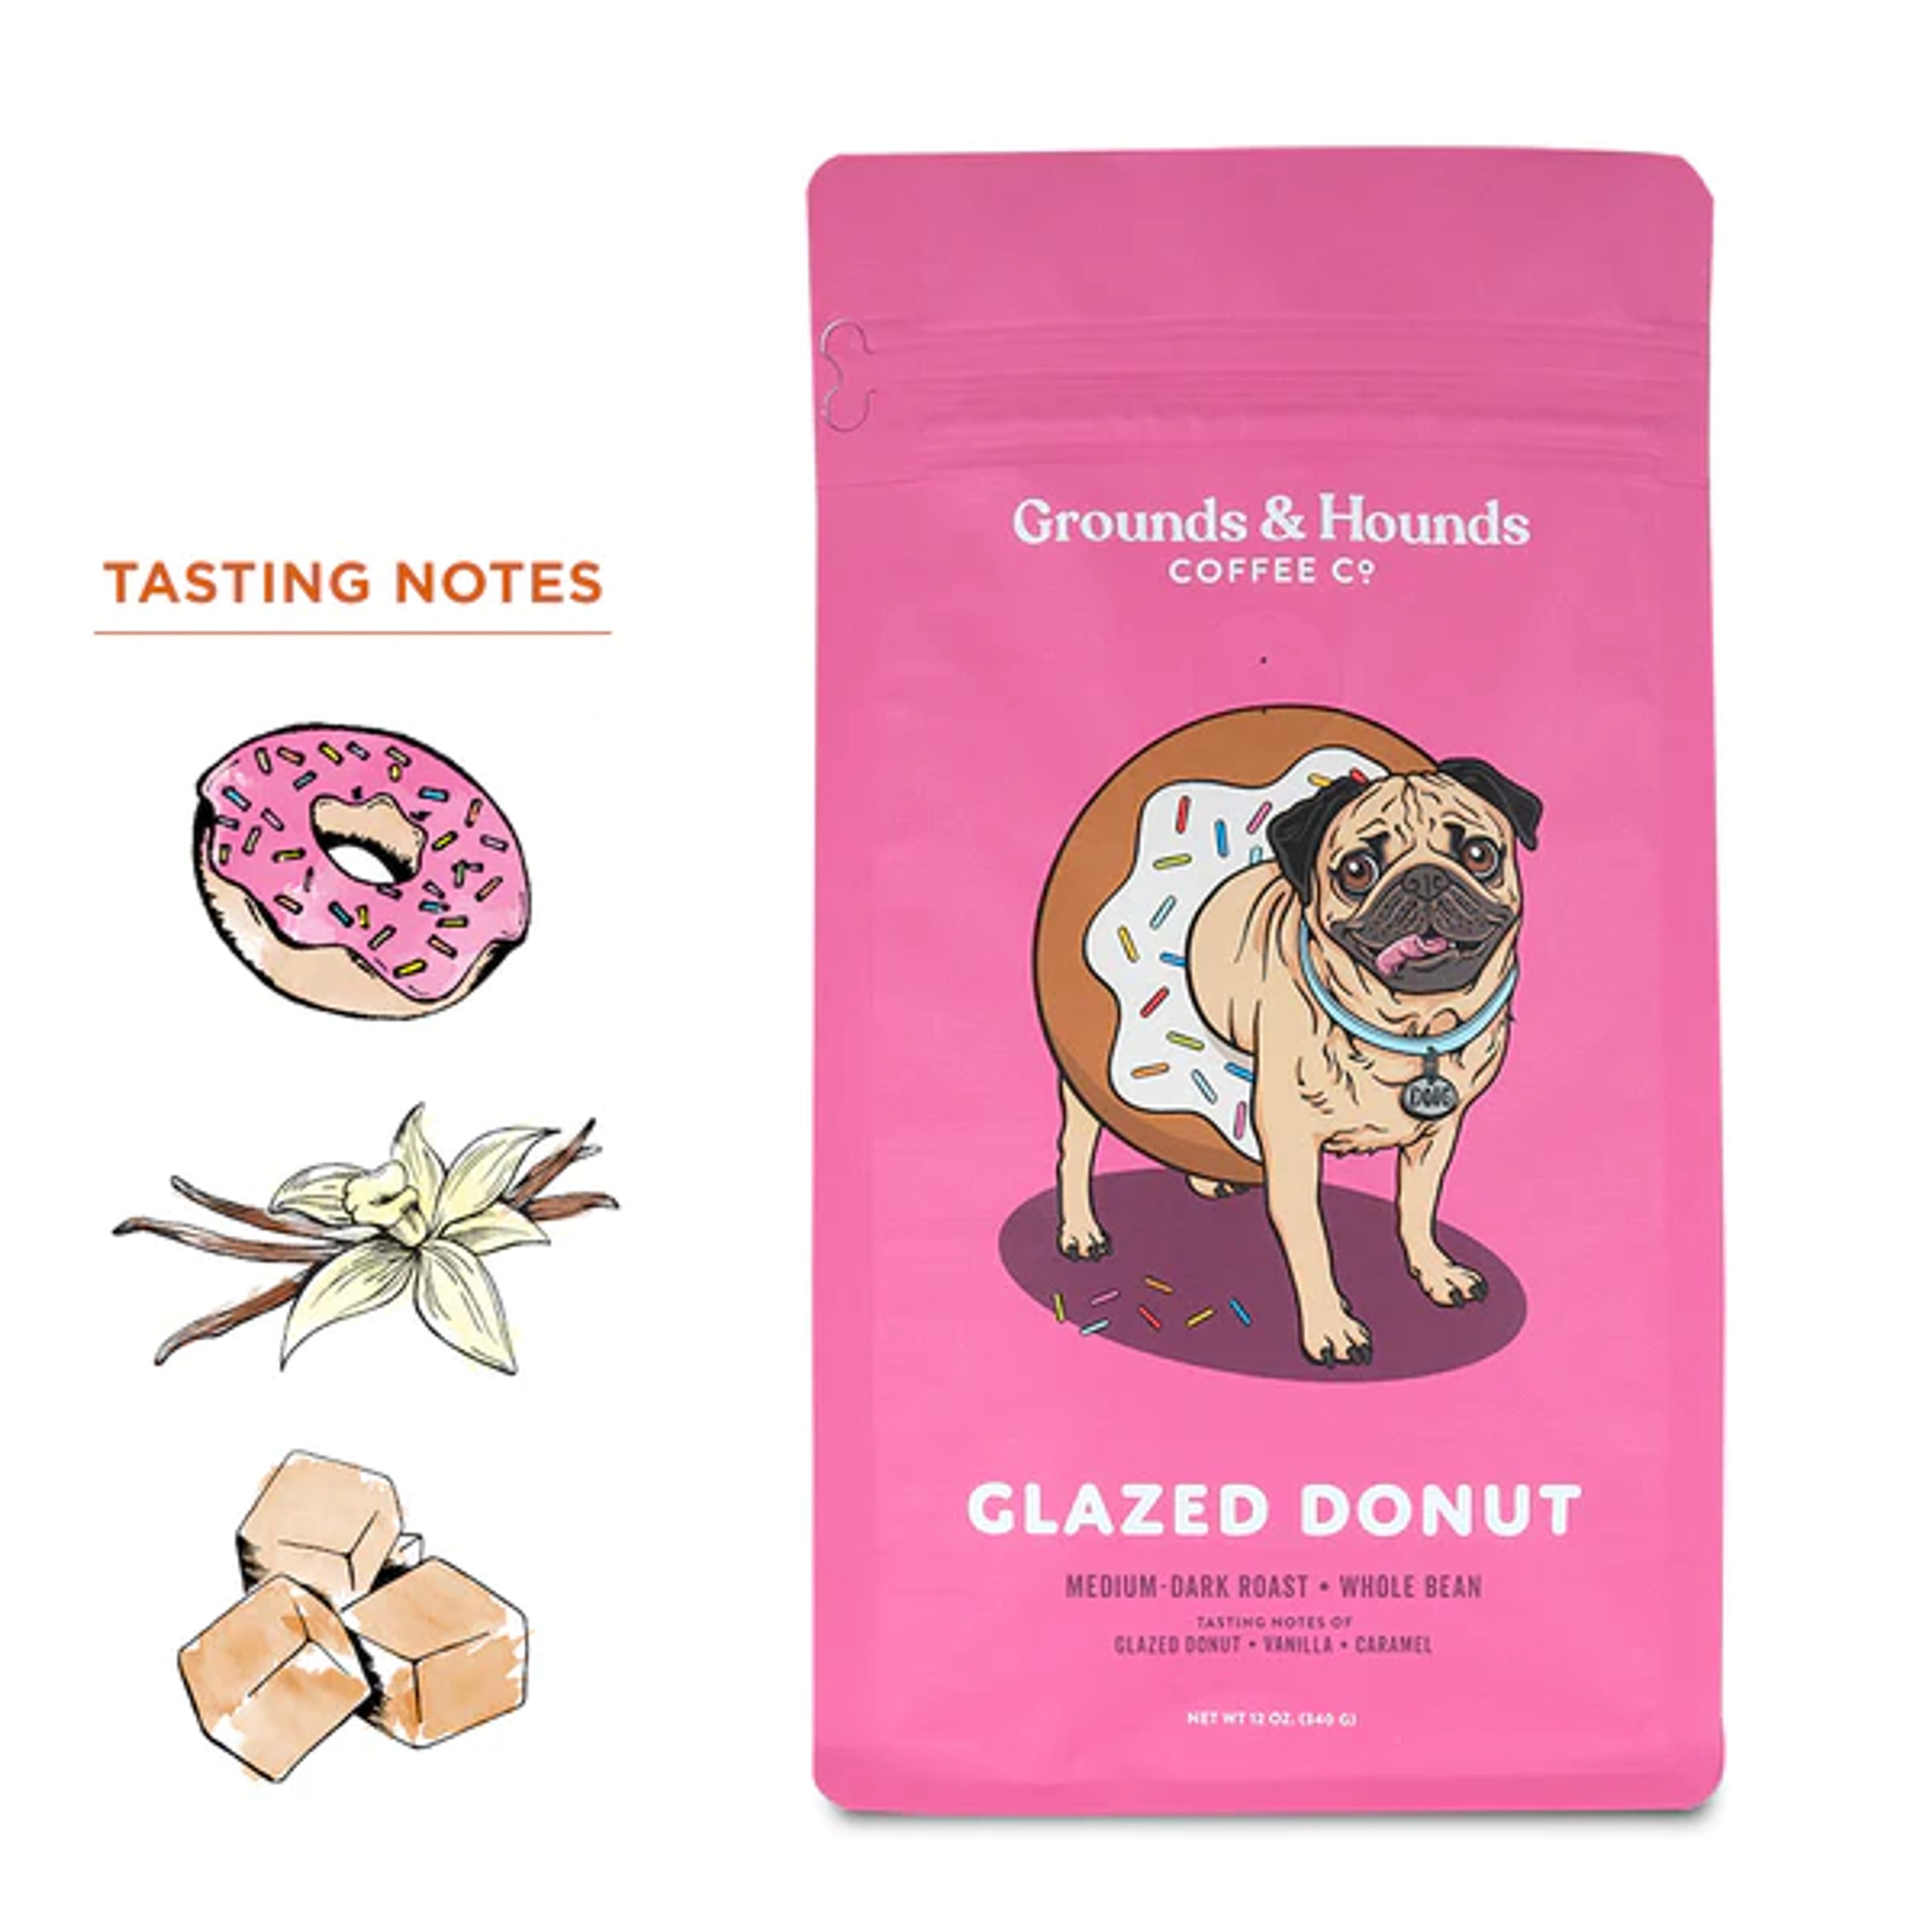 Glazed Donut Blend - Grounds & Hounds Coffee Co.